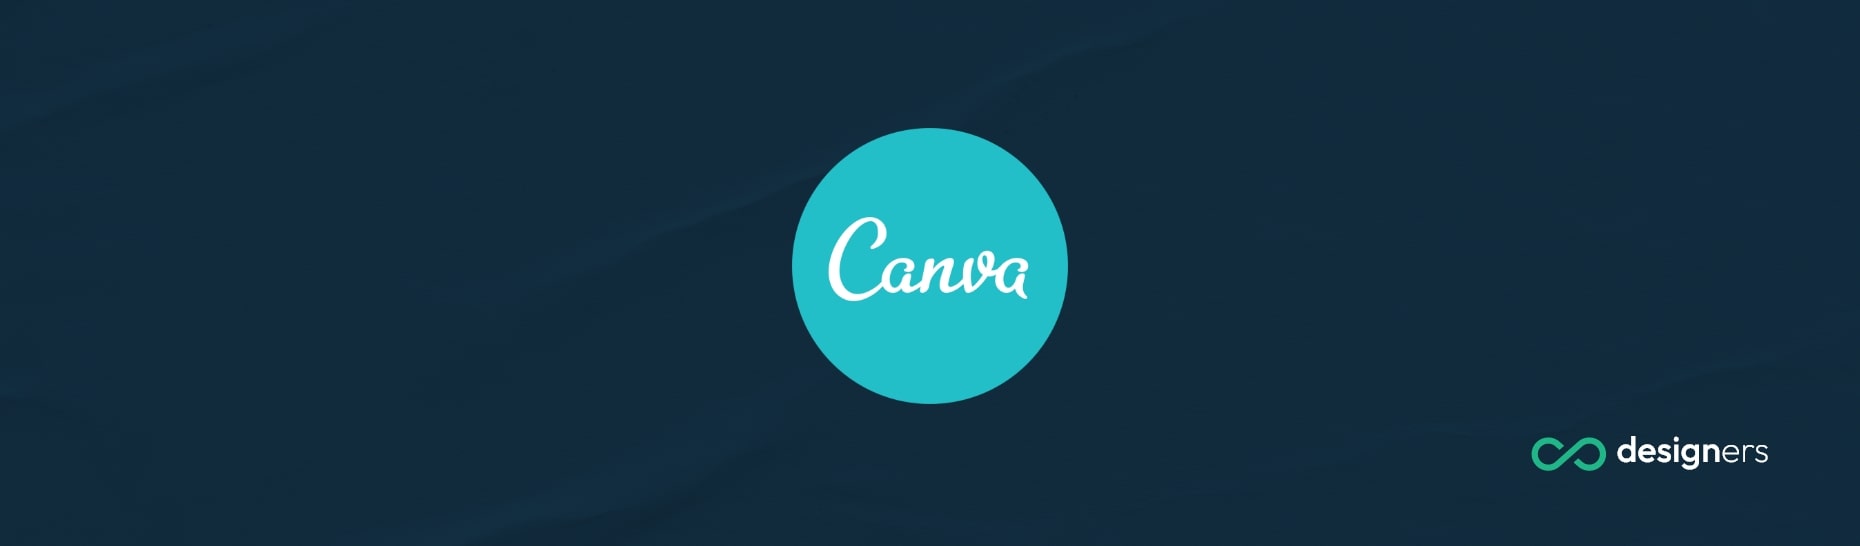 How Do I Create a Favicon in Canva?